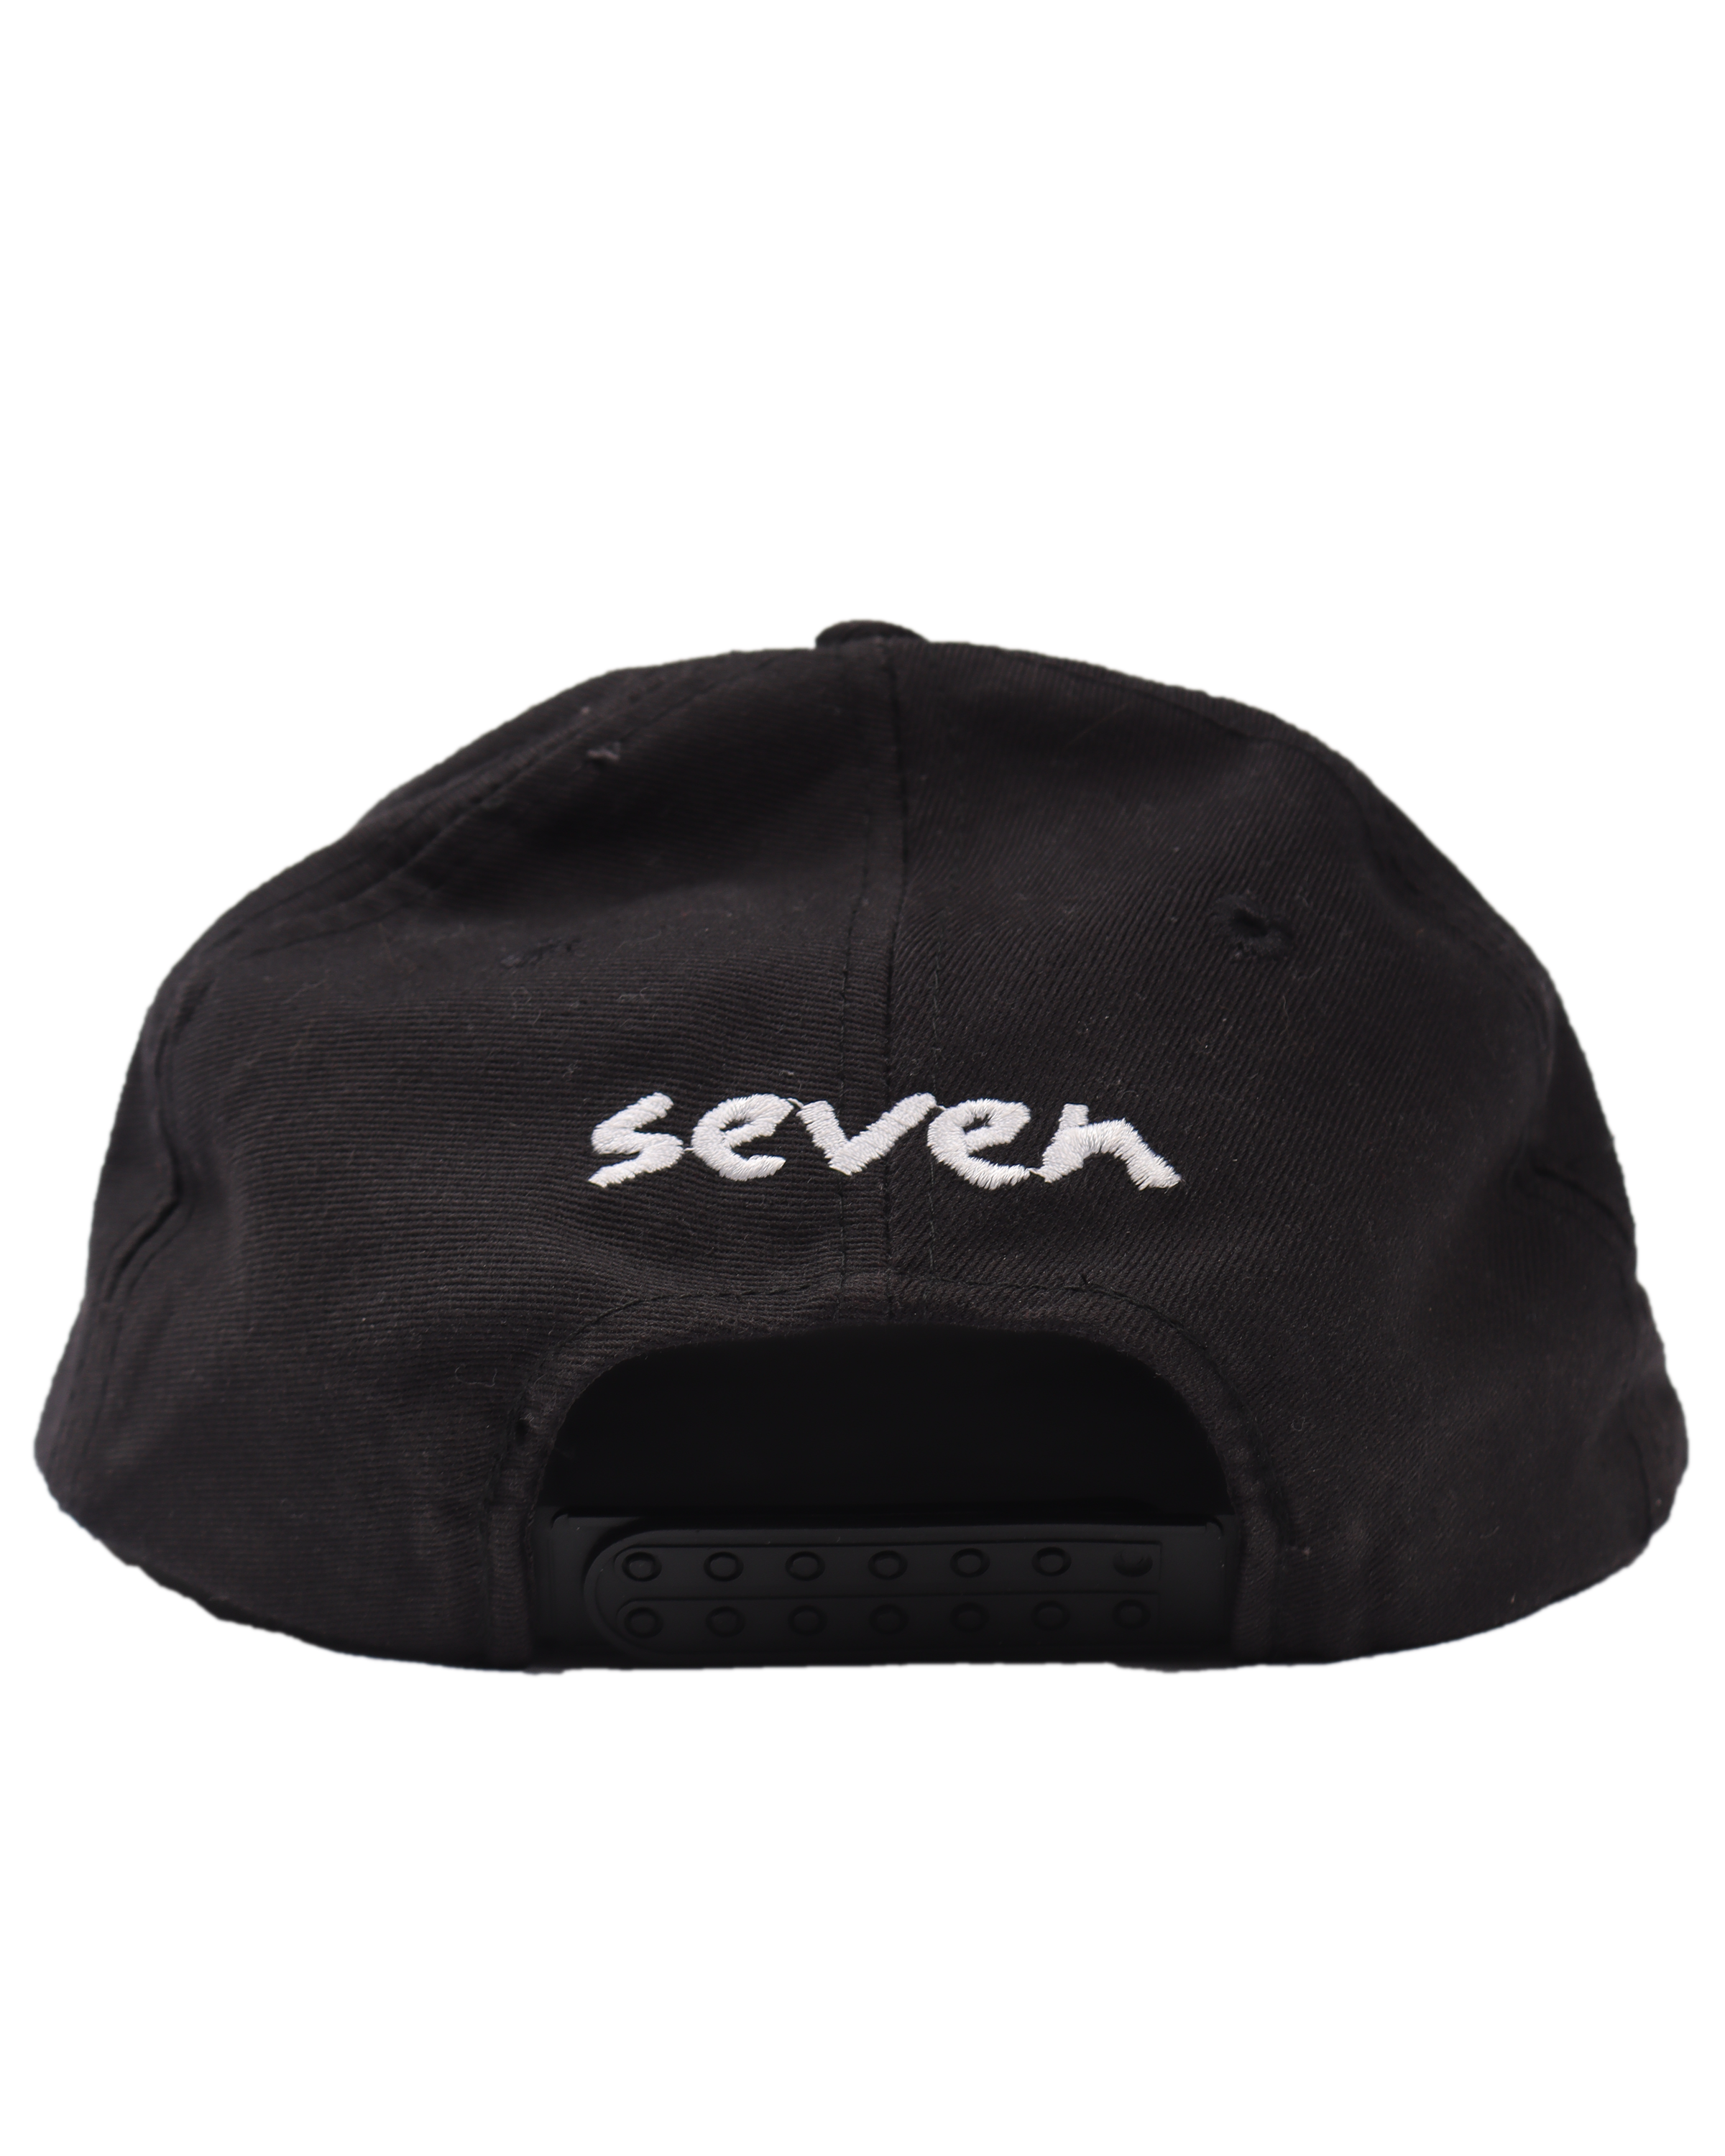 "Seven" Promotional Hat (1995)